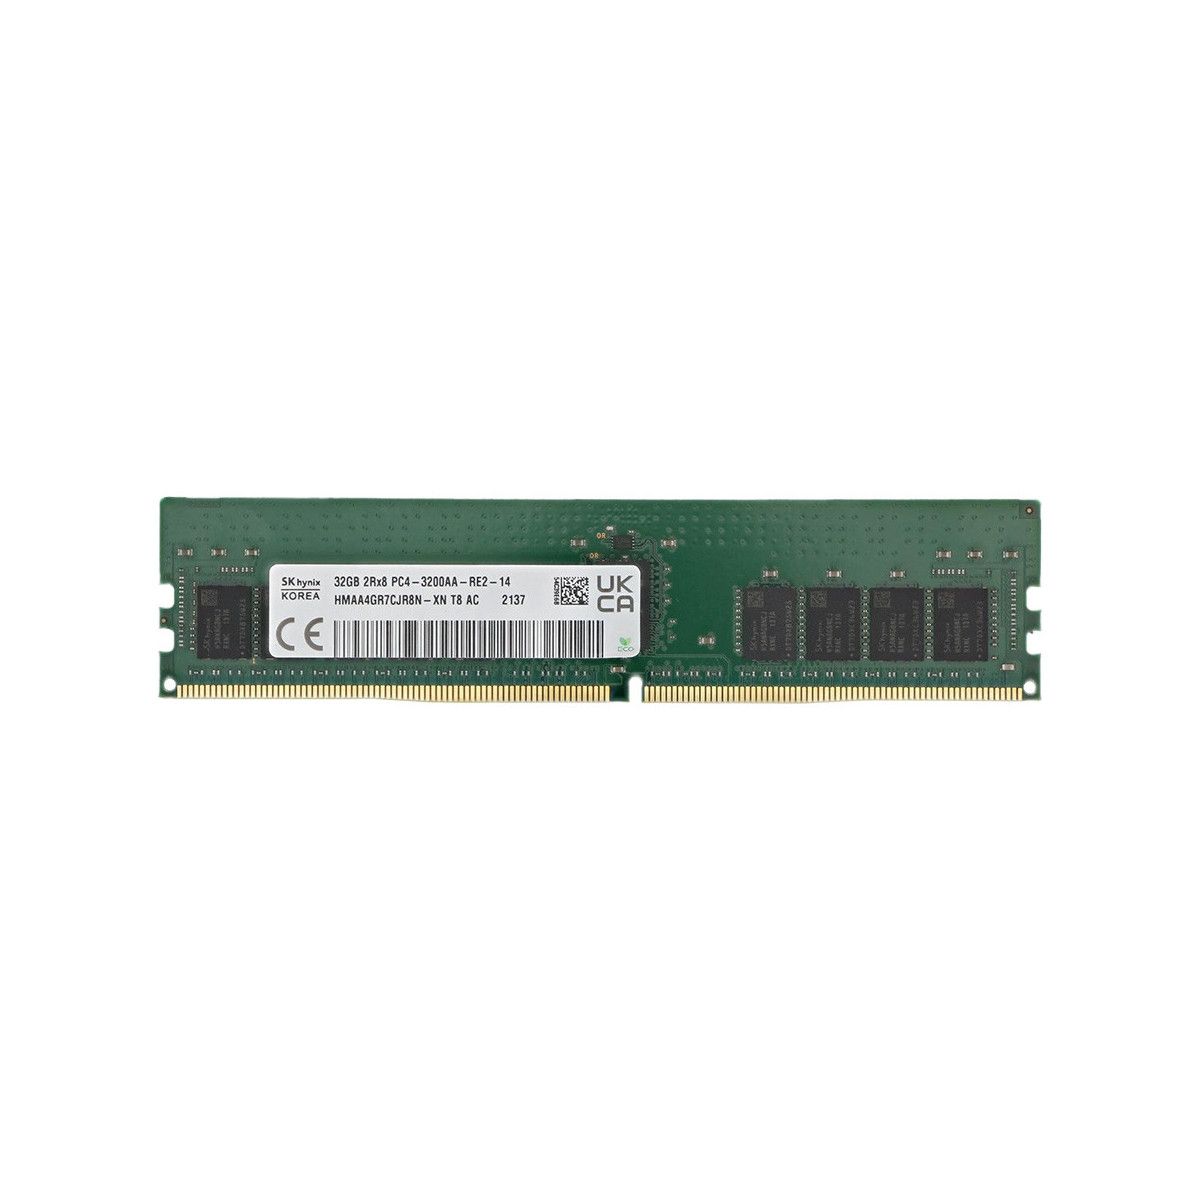 P43022-B21-MS - Memstar 1x 32GB DDR4-3200 UDIMM PC4-25600U - Mem-star OEM compatibile Memoria 1 - Memstar 